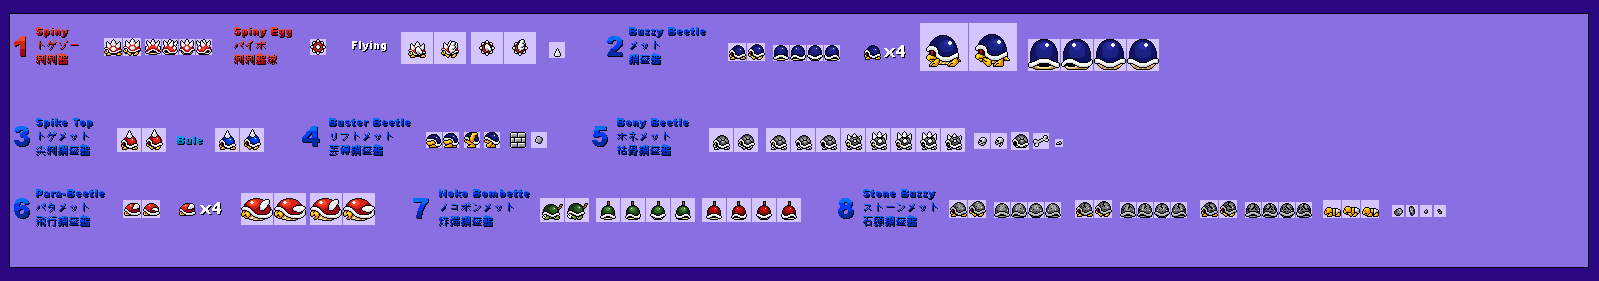 Mario Customs - Buzzy Beetle & Spiny (SNES-Style)